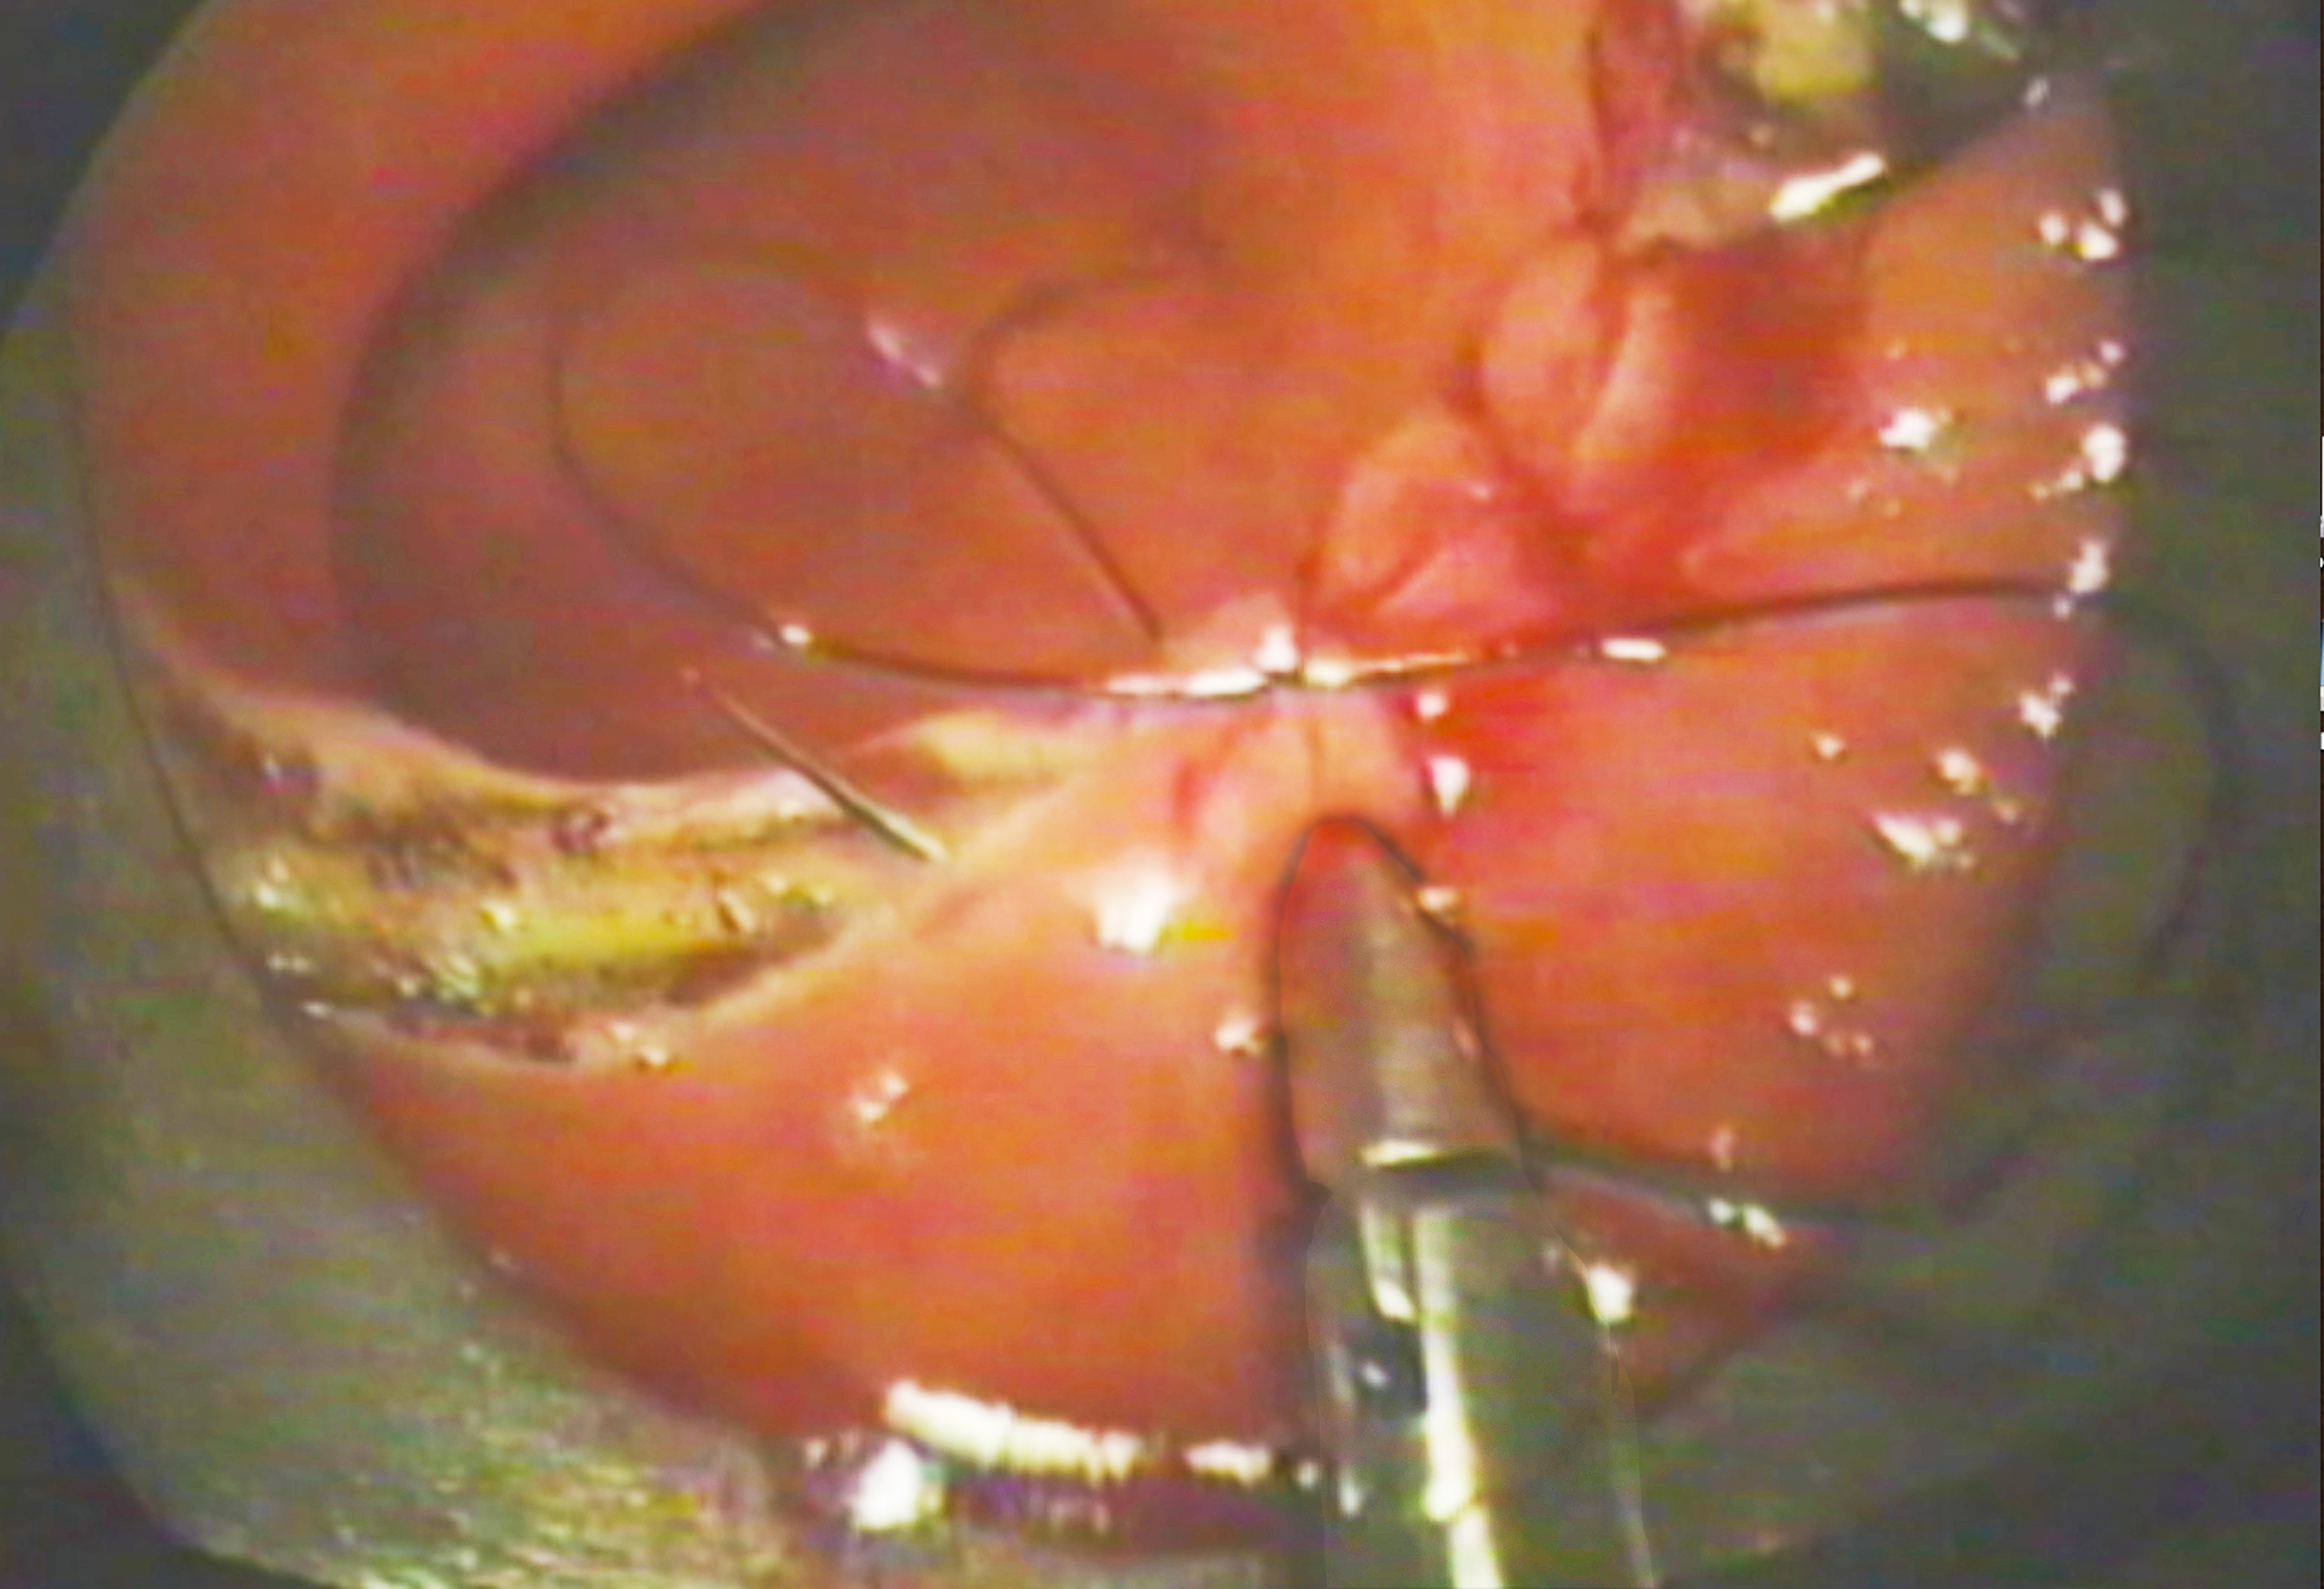 Transanal endoscopic surgery demonstrating suturing technique.